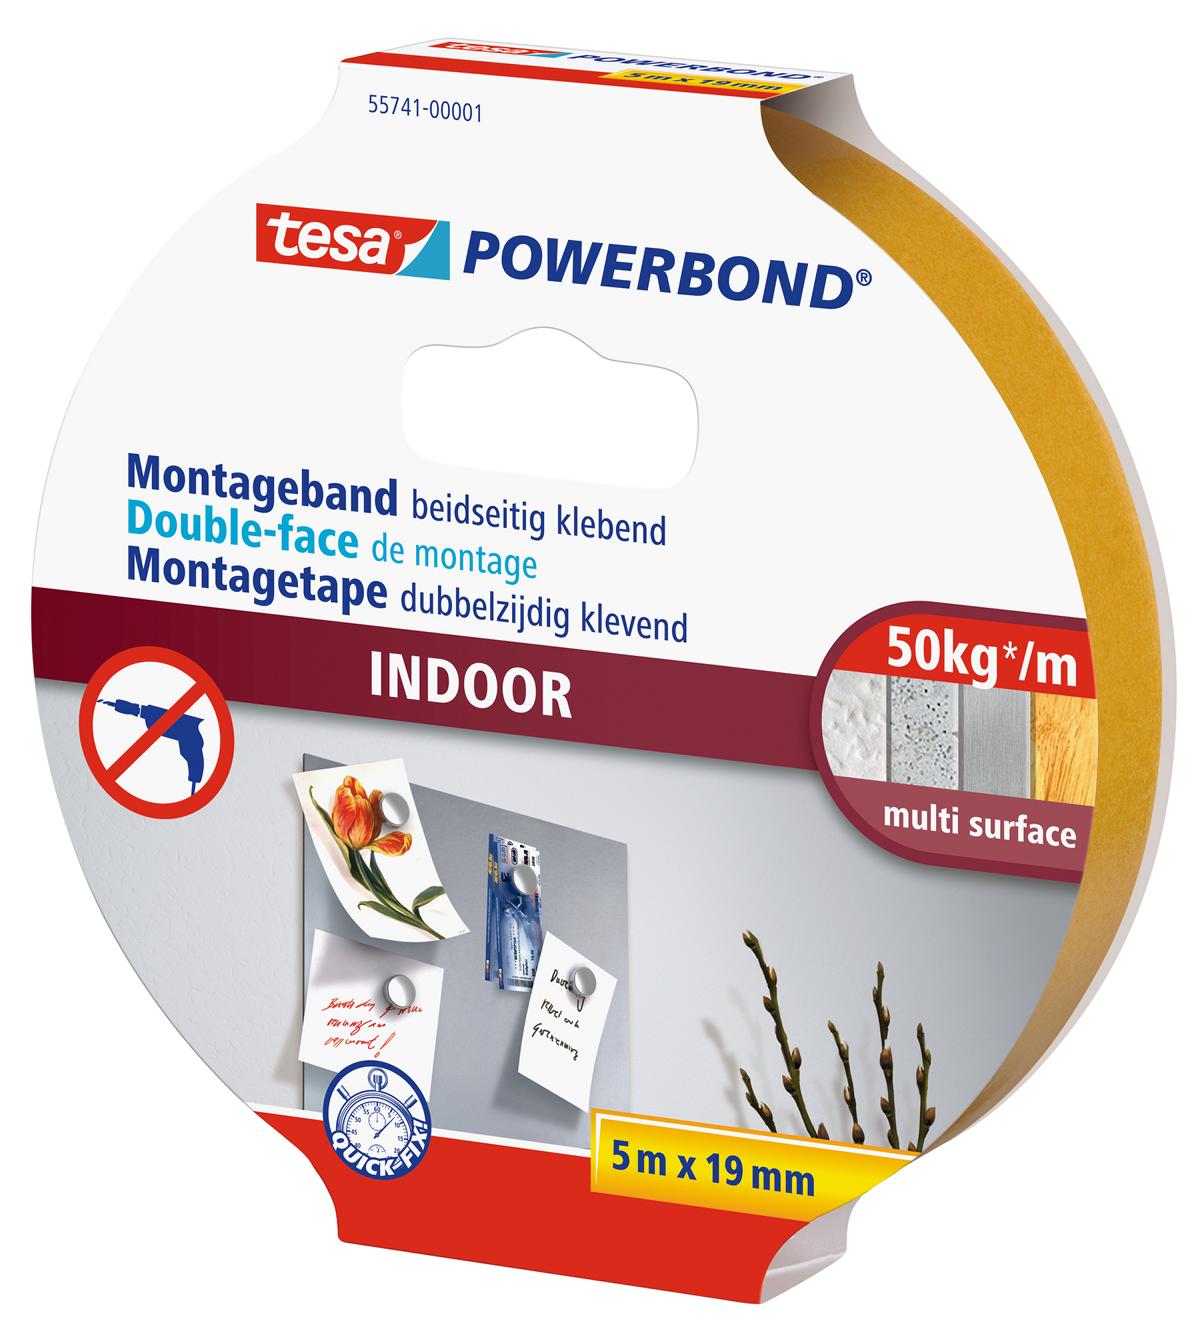 tesa Powerbond Montageband Indoor, 5 m